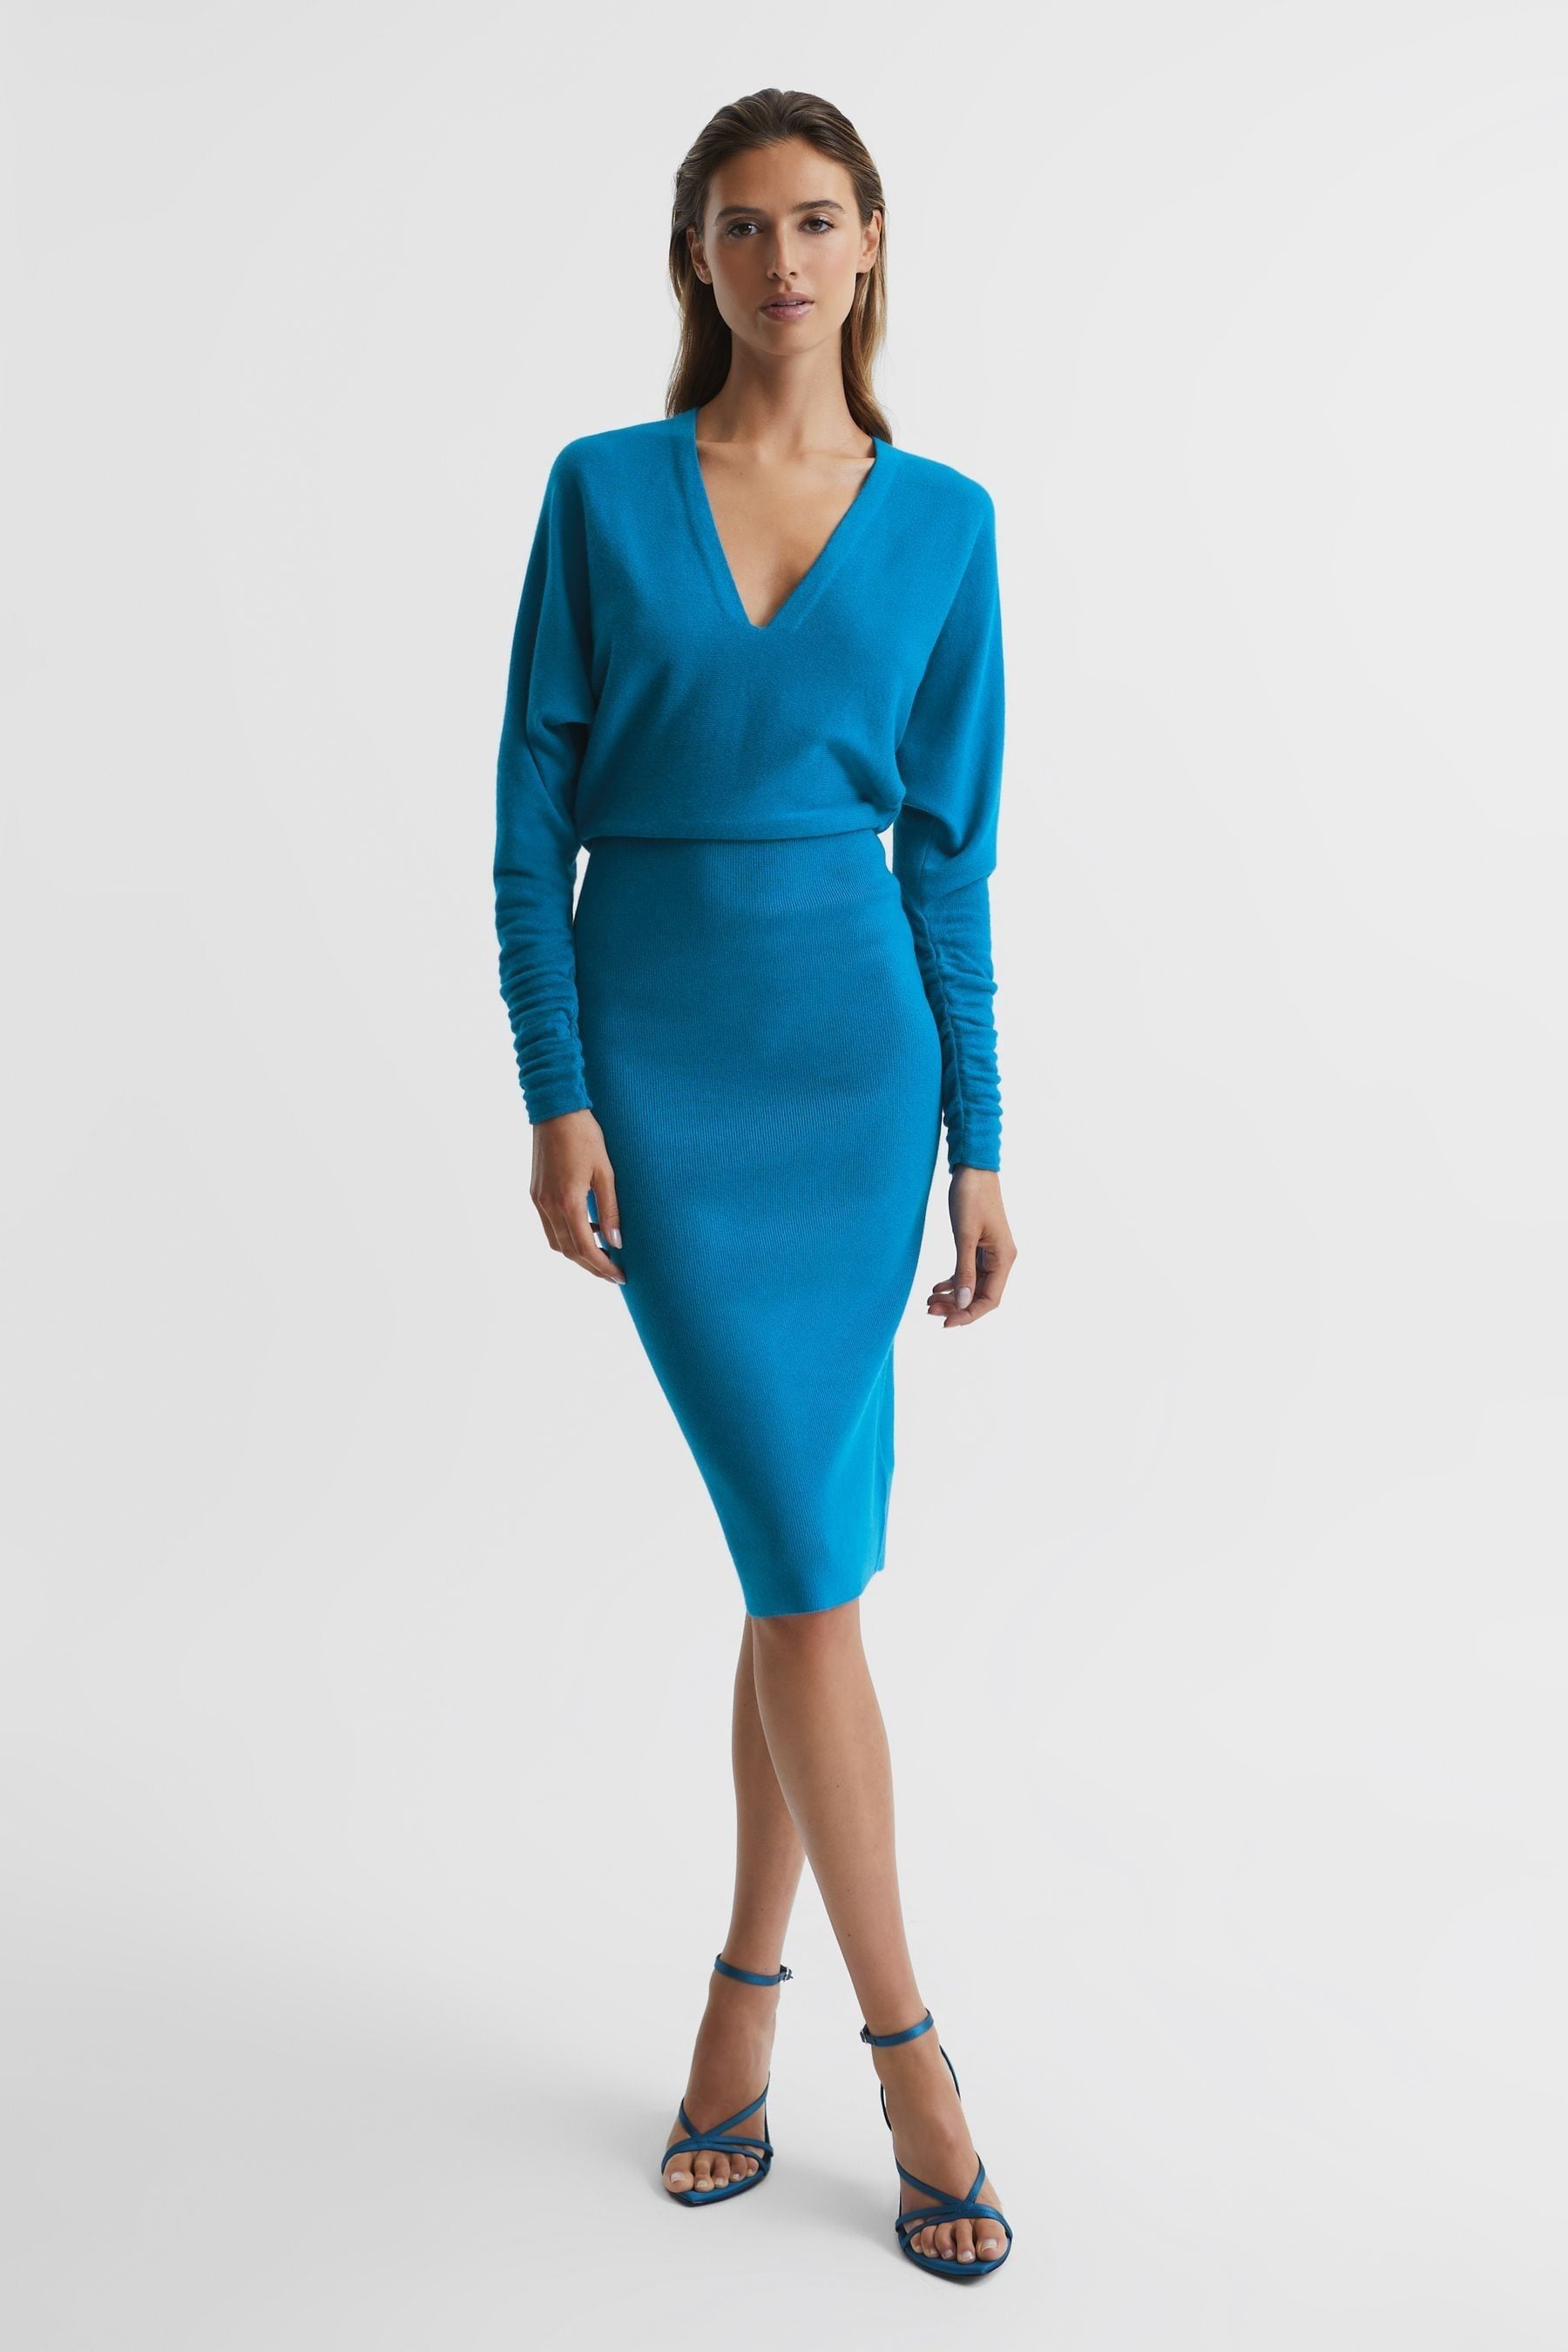 Reiss Jenna - Blue Wool Blend Ruched Sleeve Midi Dress, M